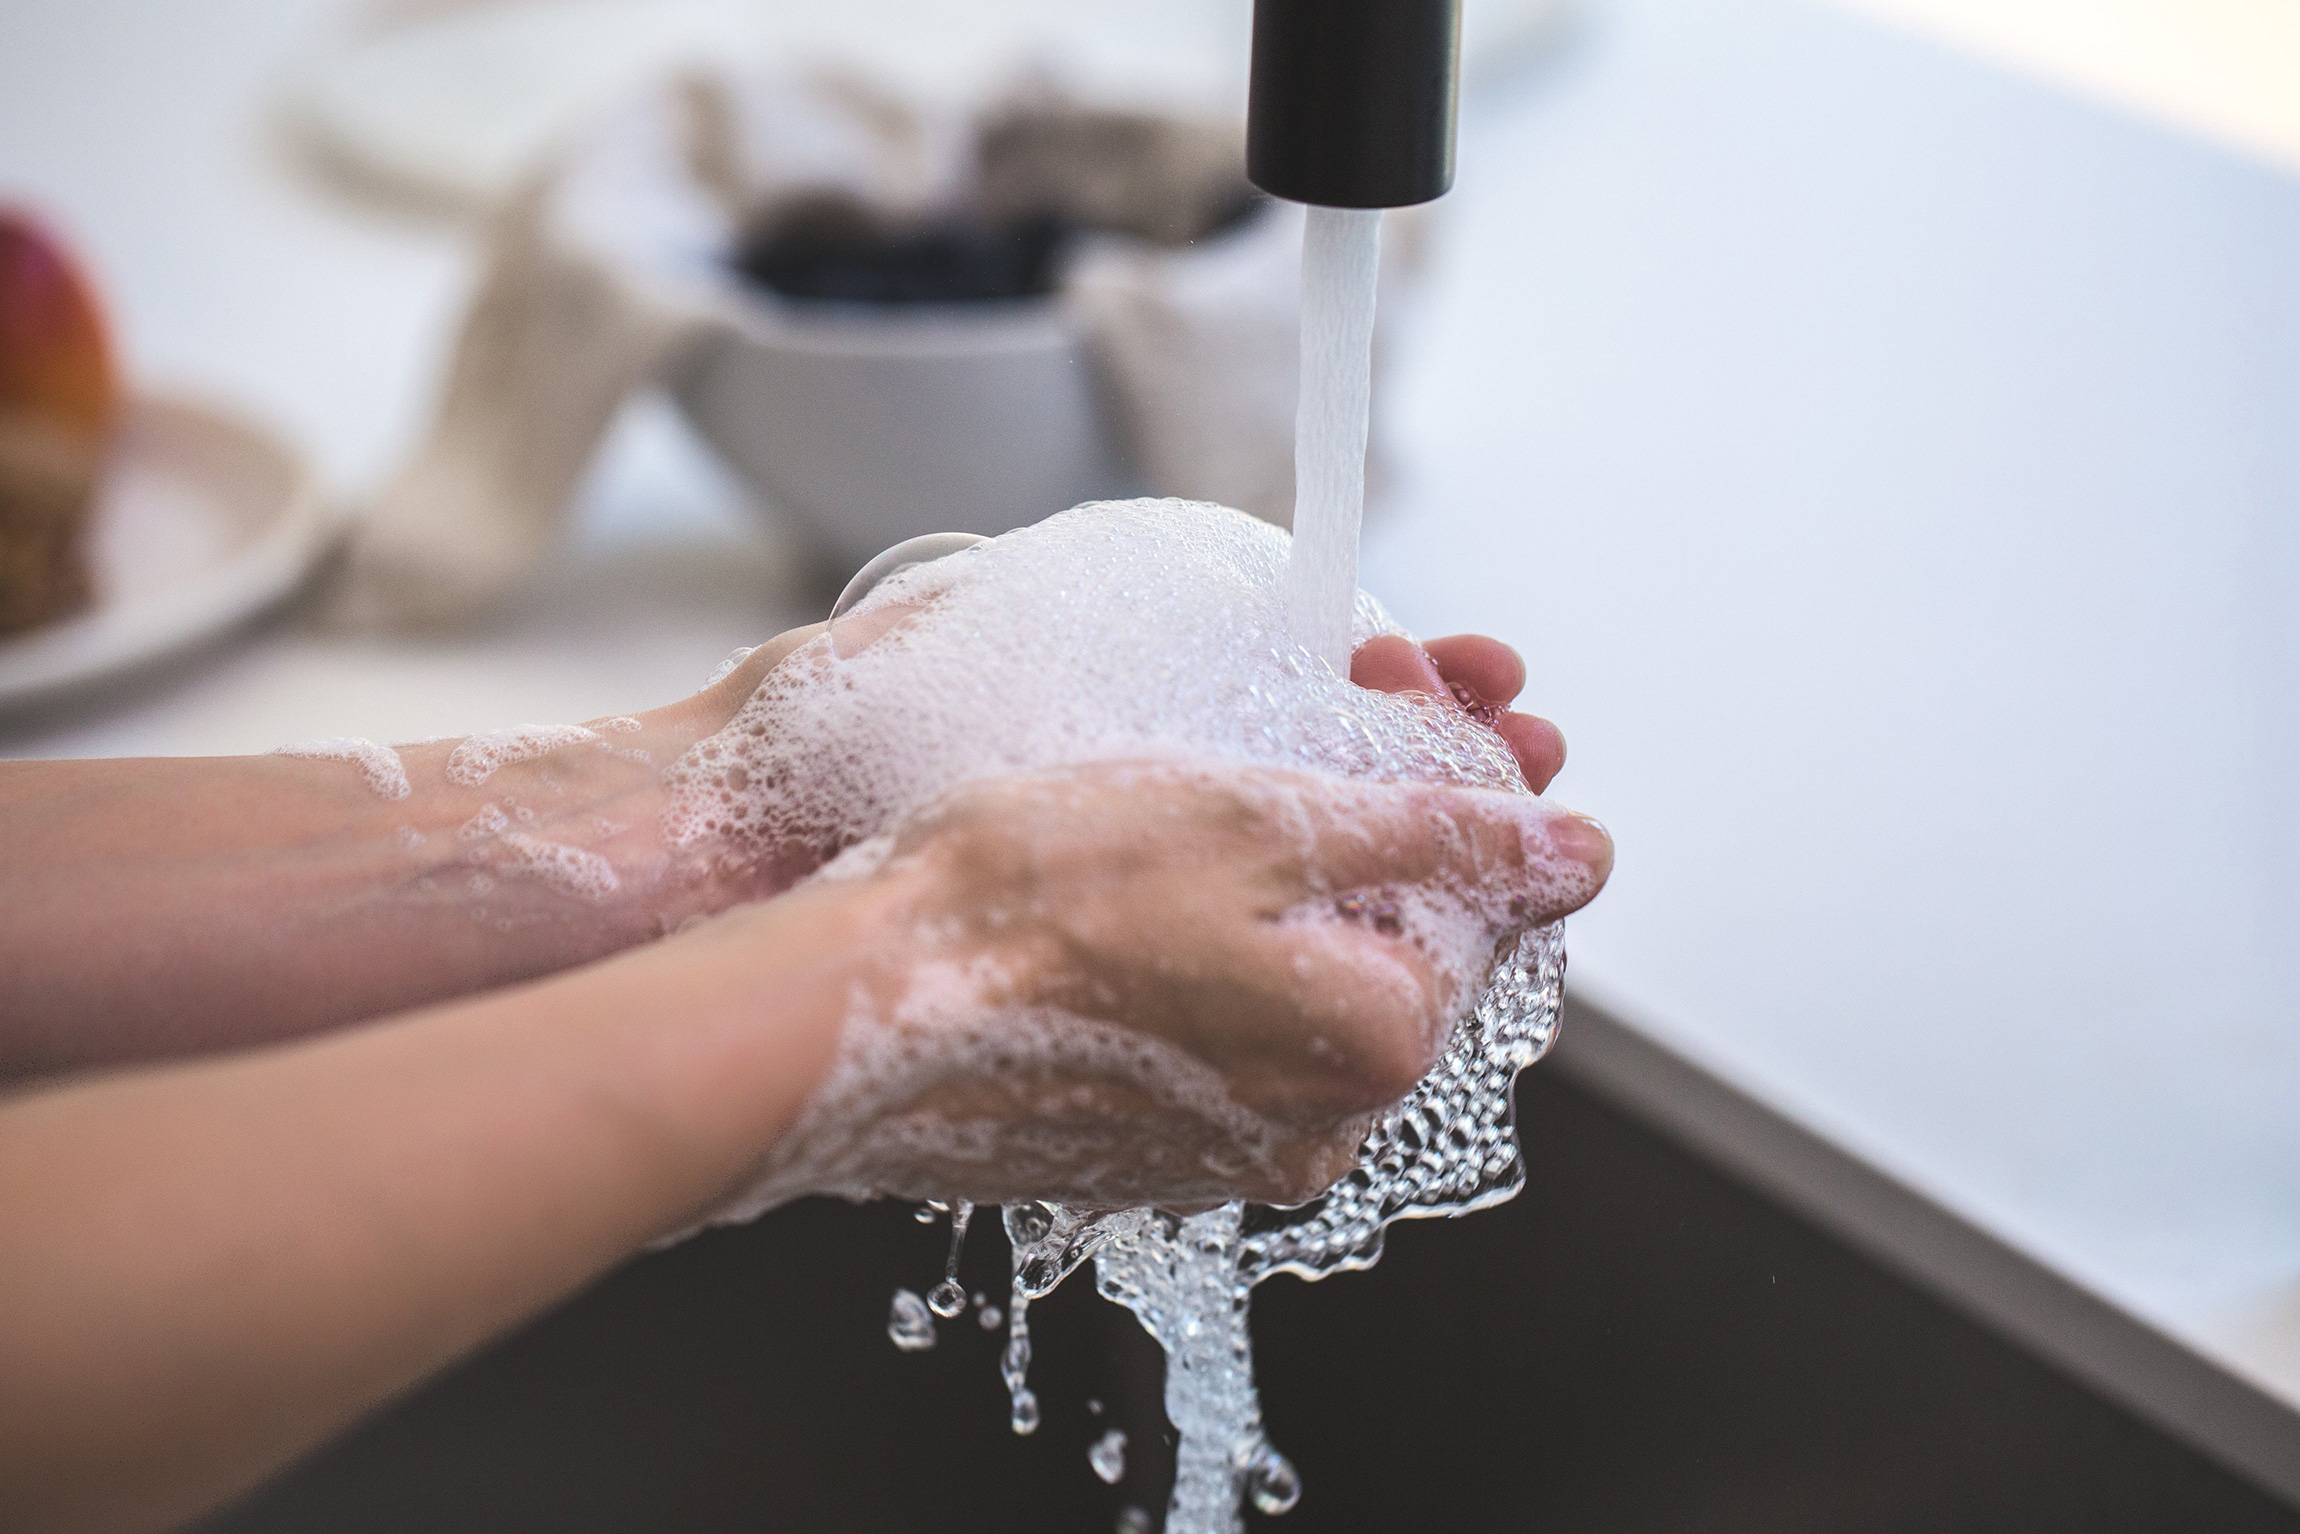 Viergang handen wassen